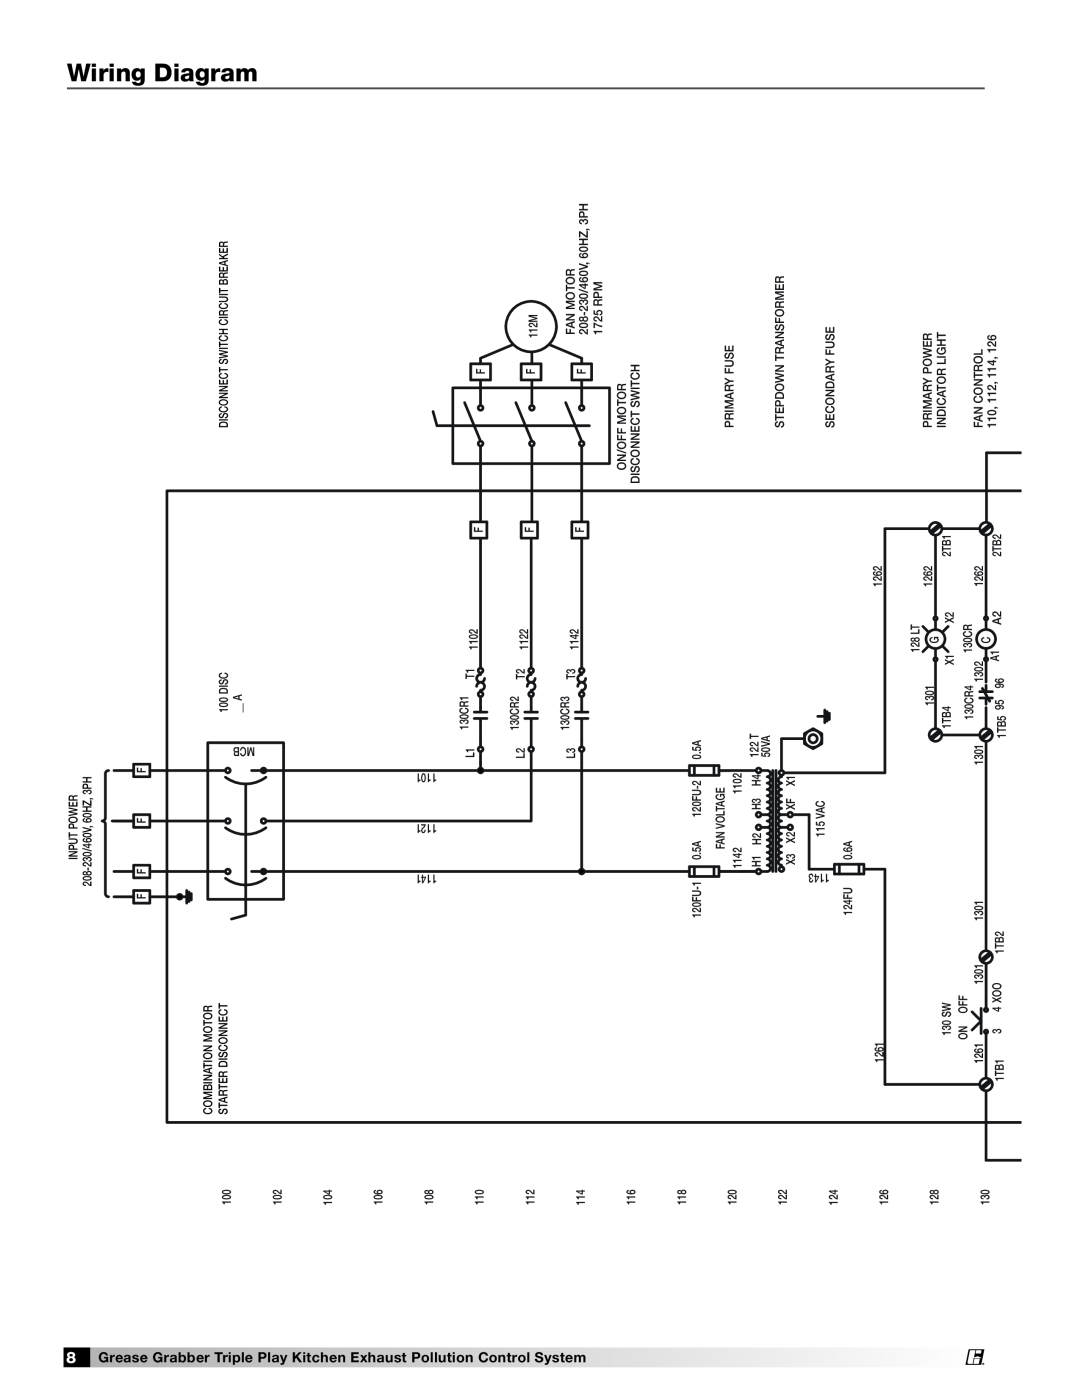 Greenheck Fan 474753 installation manual Diagram, Wiring, Grease, 1141, 1121, 1101, 1143 